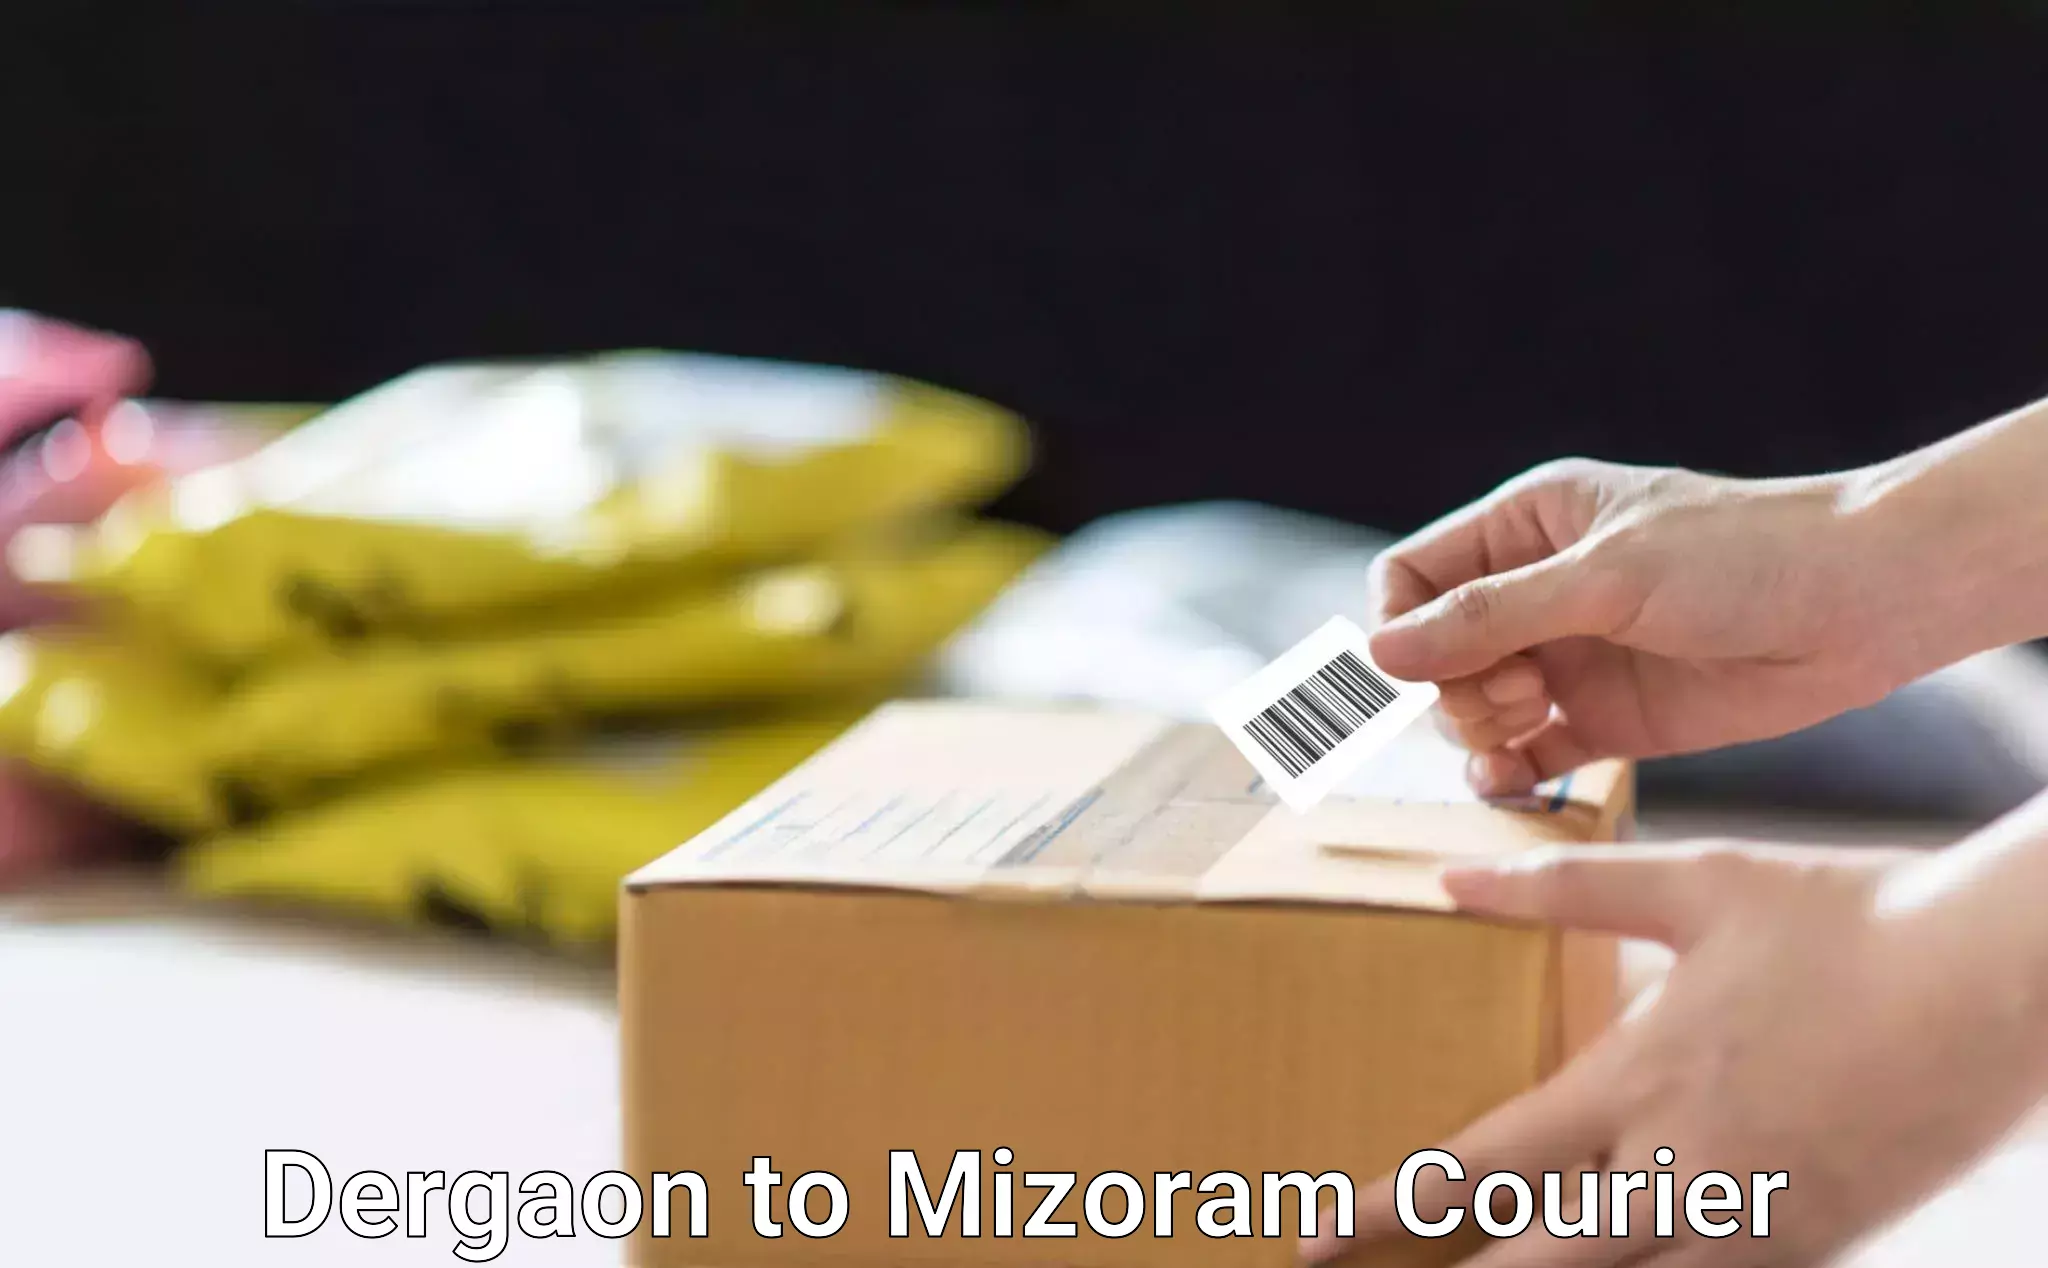 User-friendly delivery service Dergaon to Mizoram